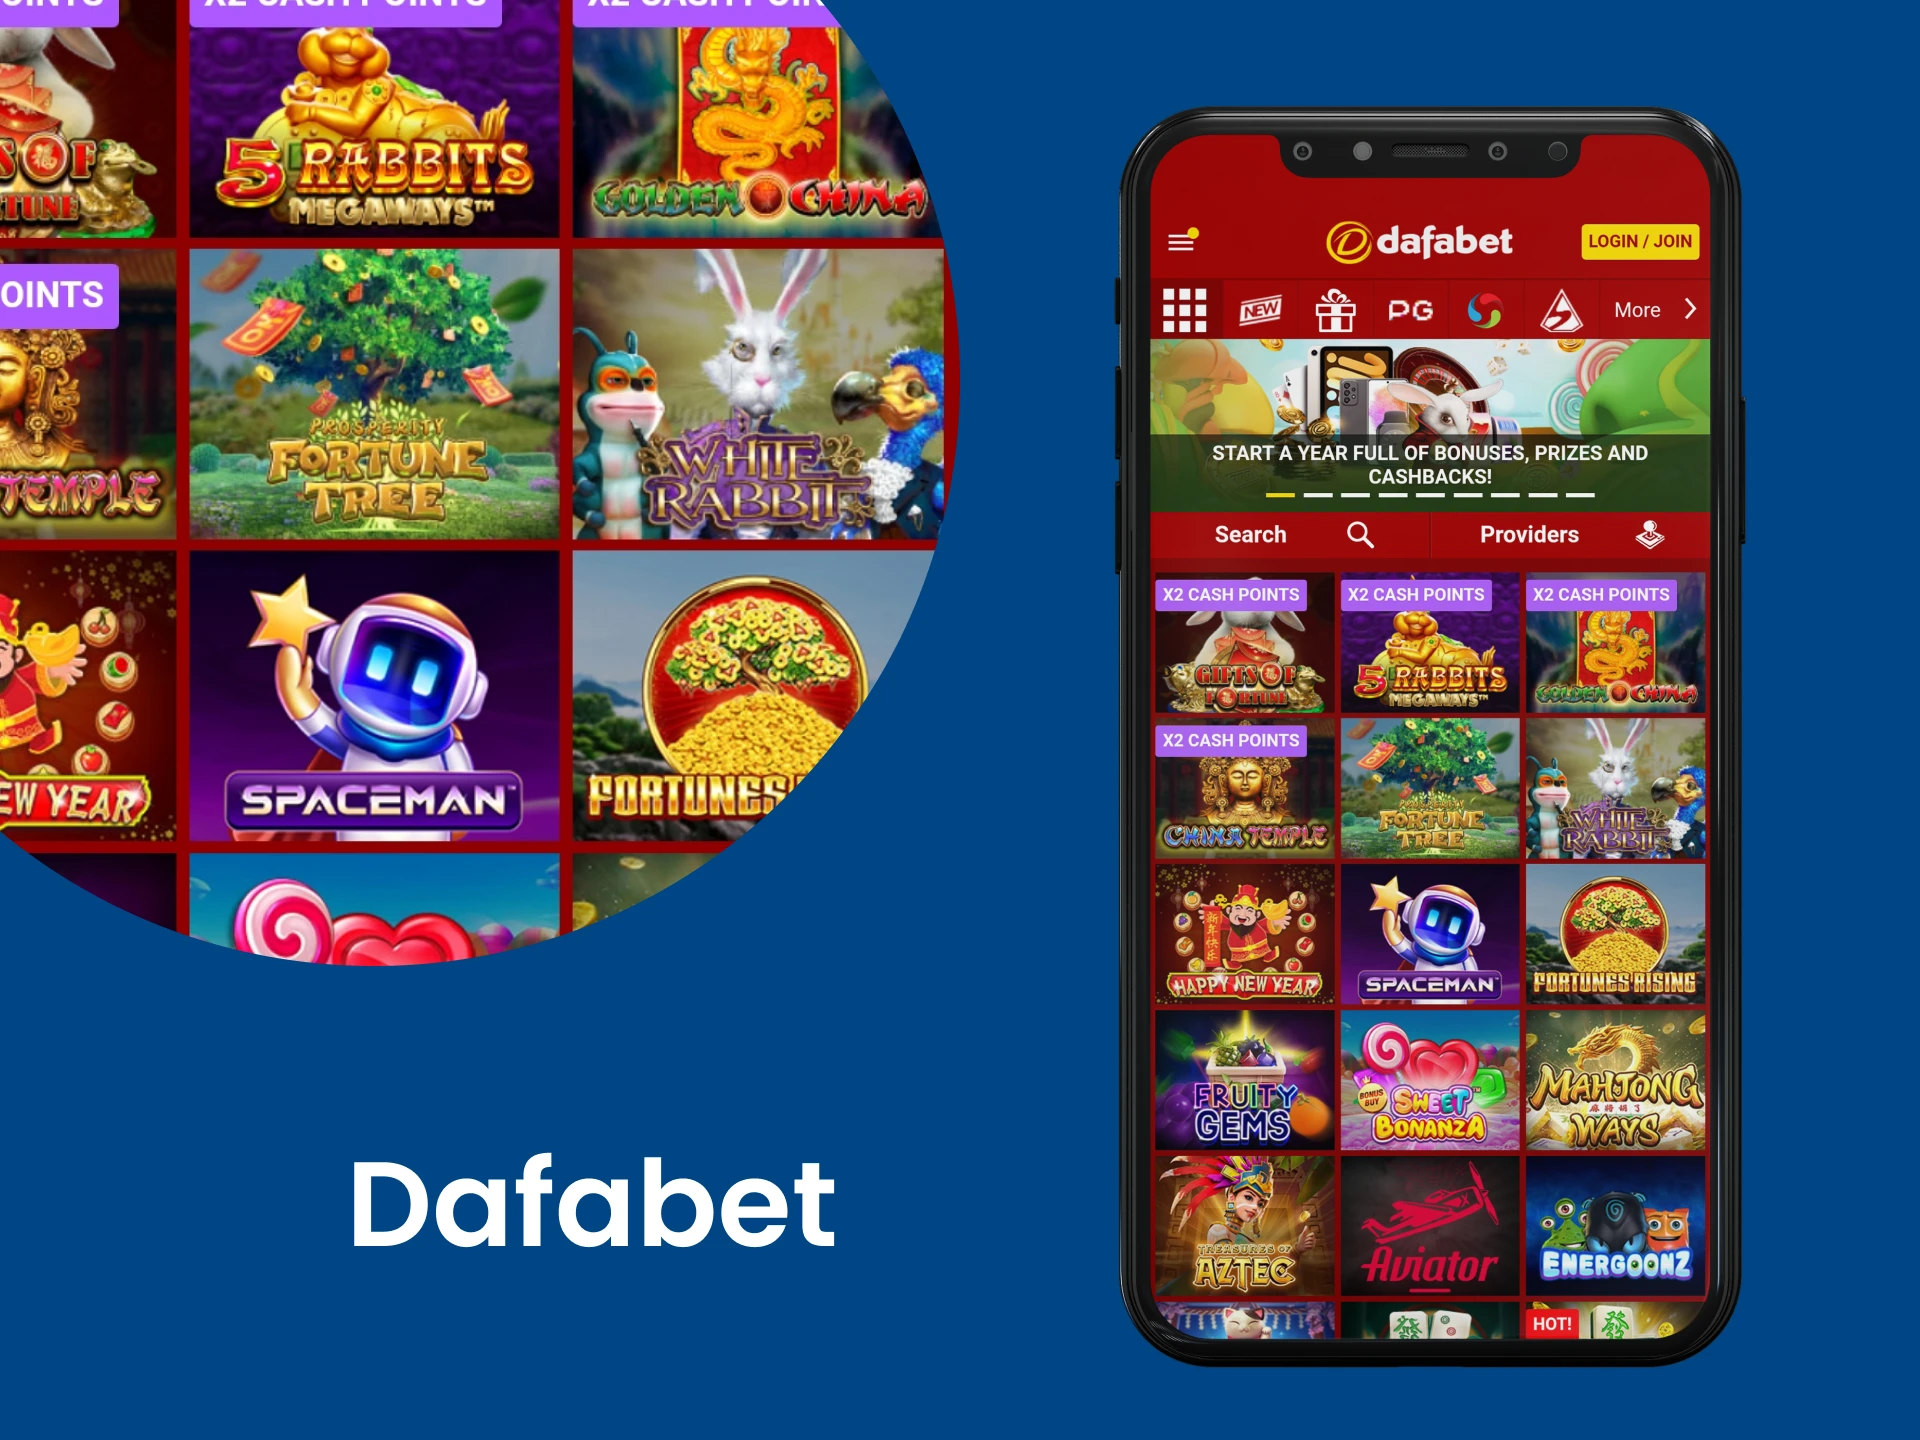 For casino games, choose Dafabet.